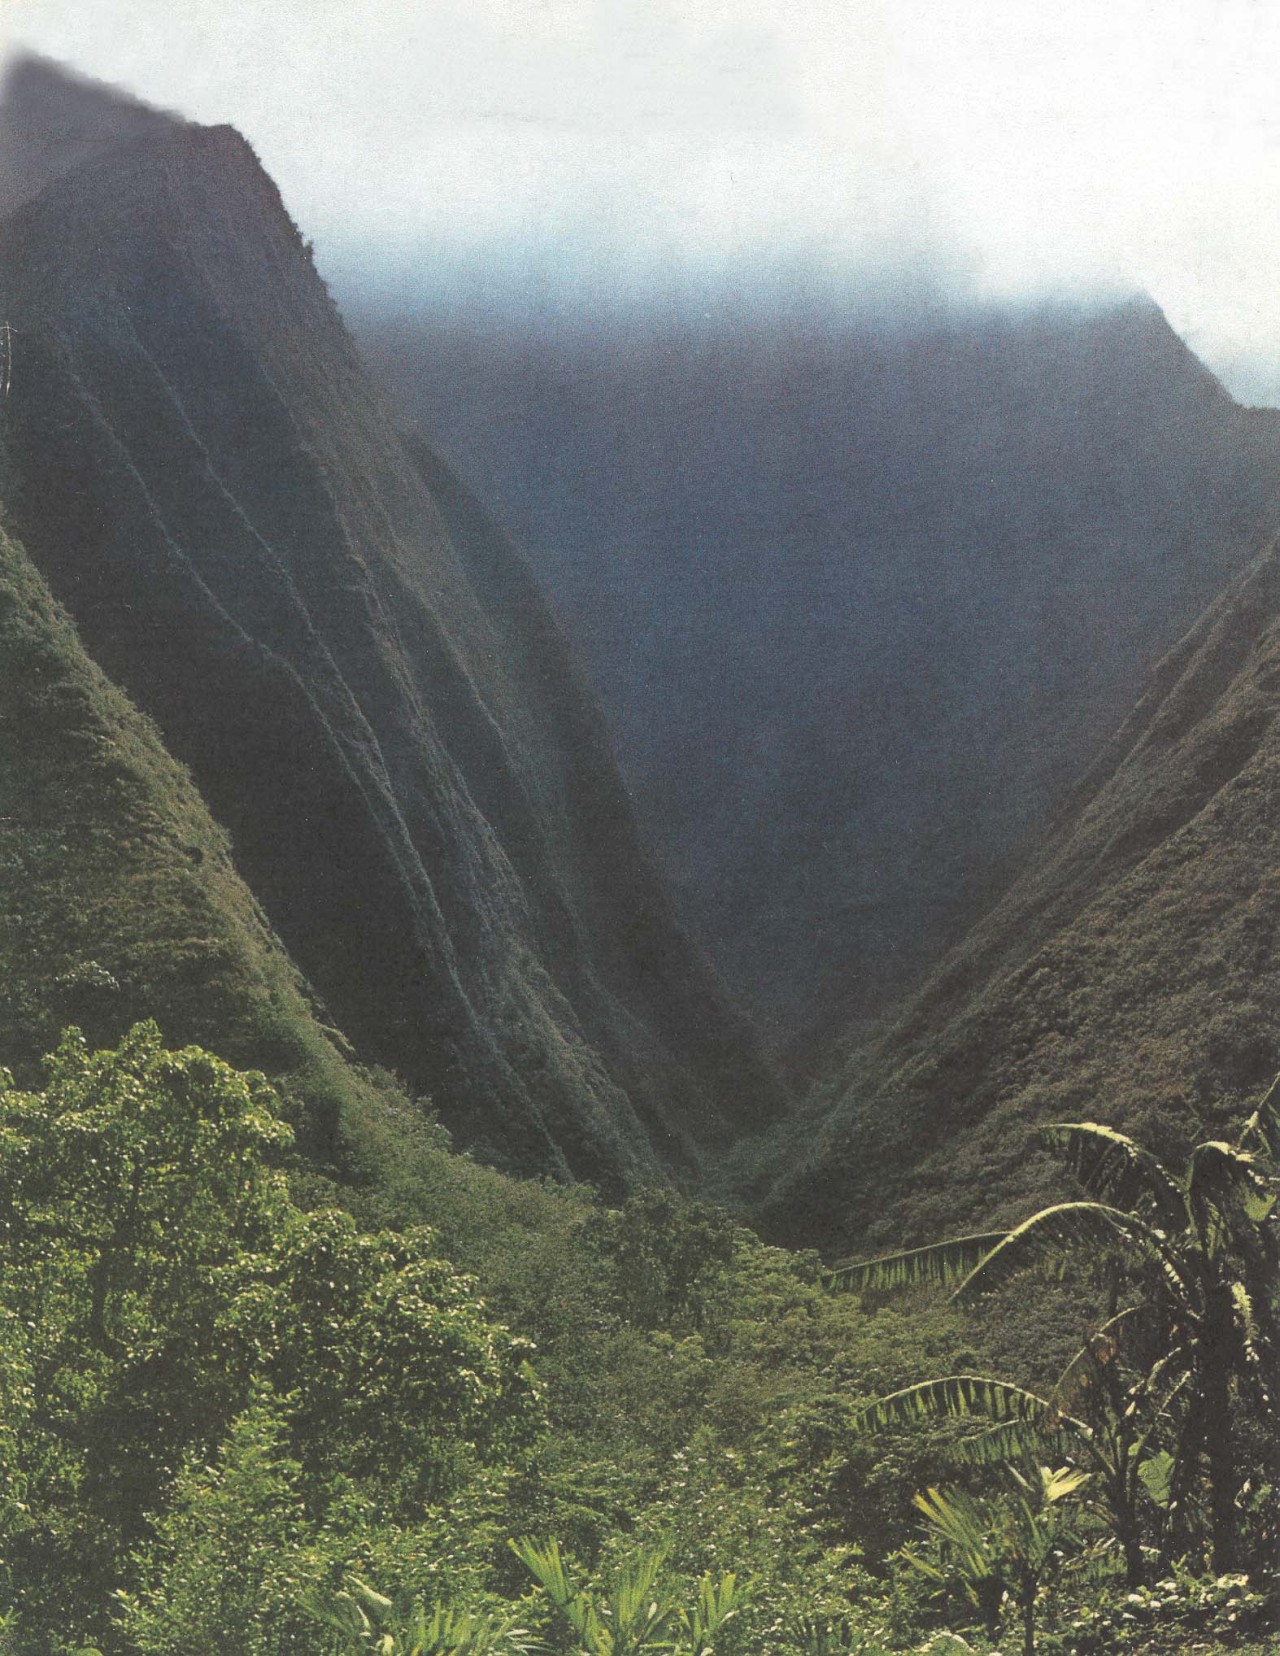 equatorjournal:
“hawaii, 1972
”